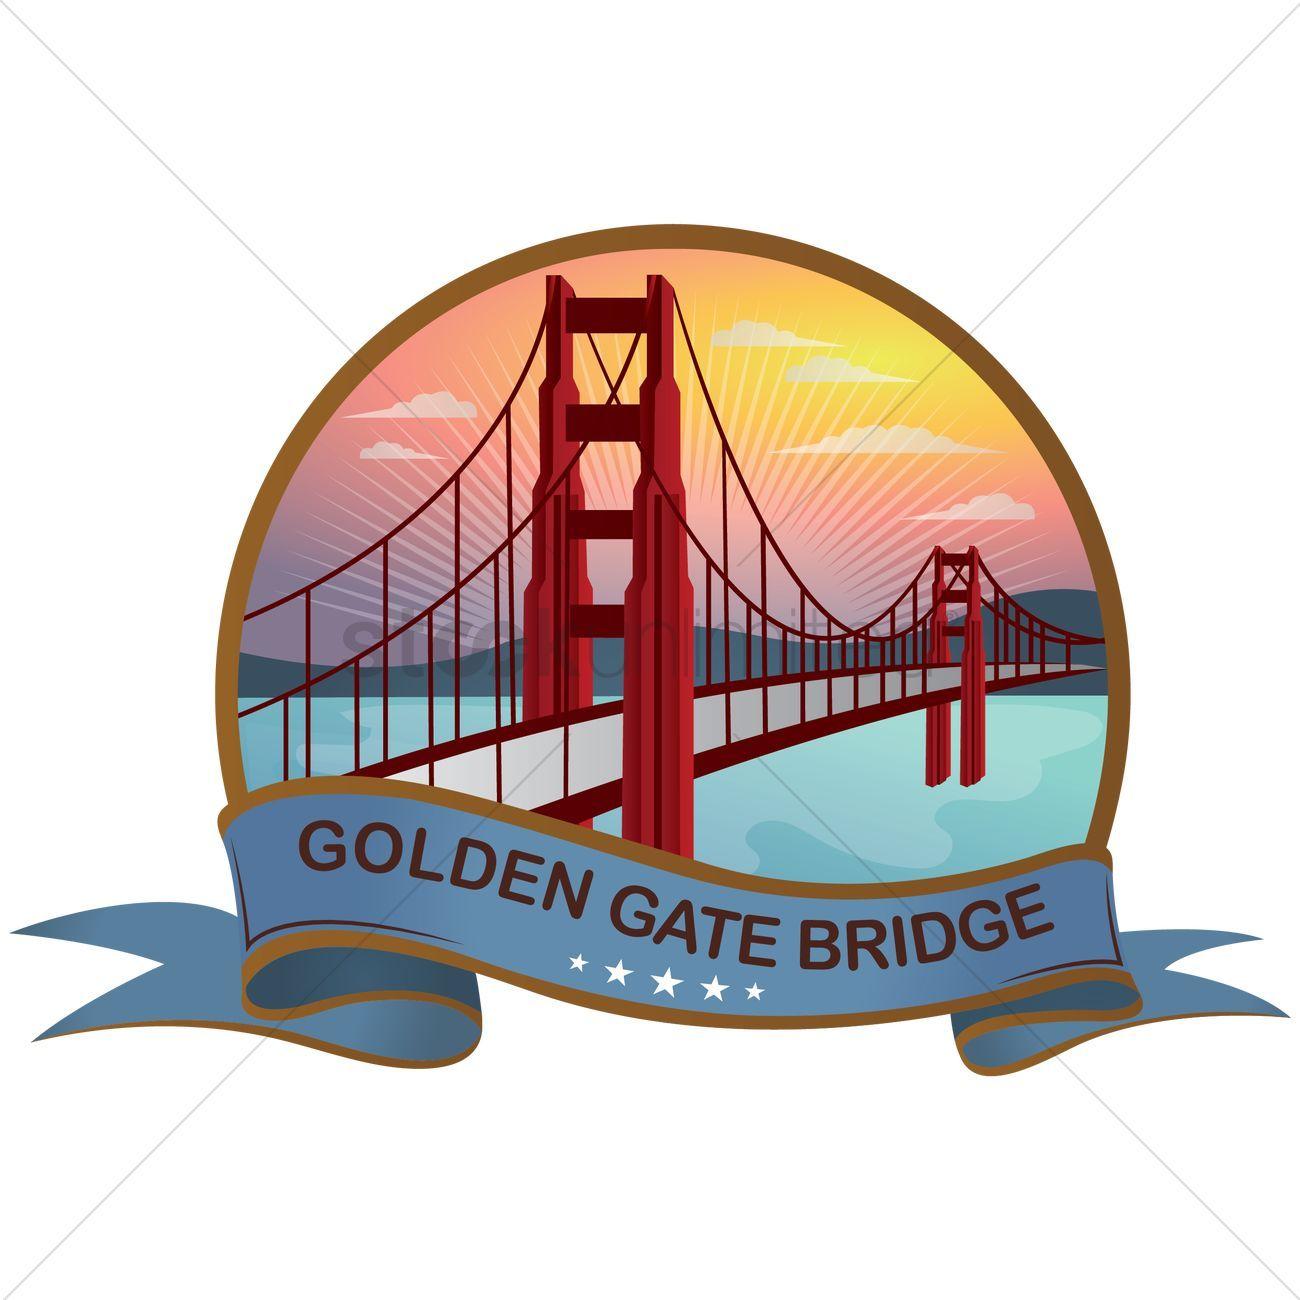 Golden Gate Bridge Logo - Golden gate bridge Vector Image - 1569058 | StockUnlimited